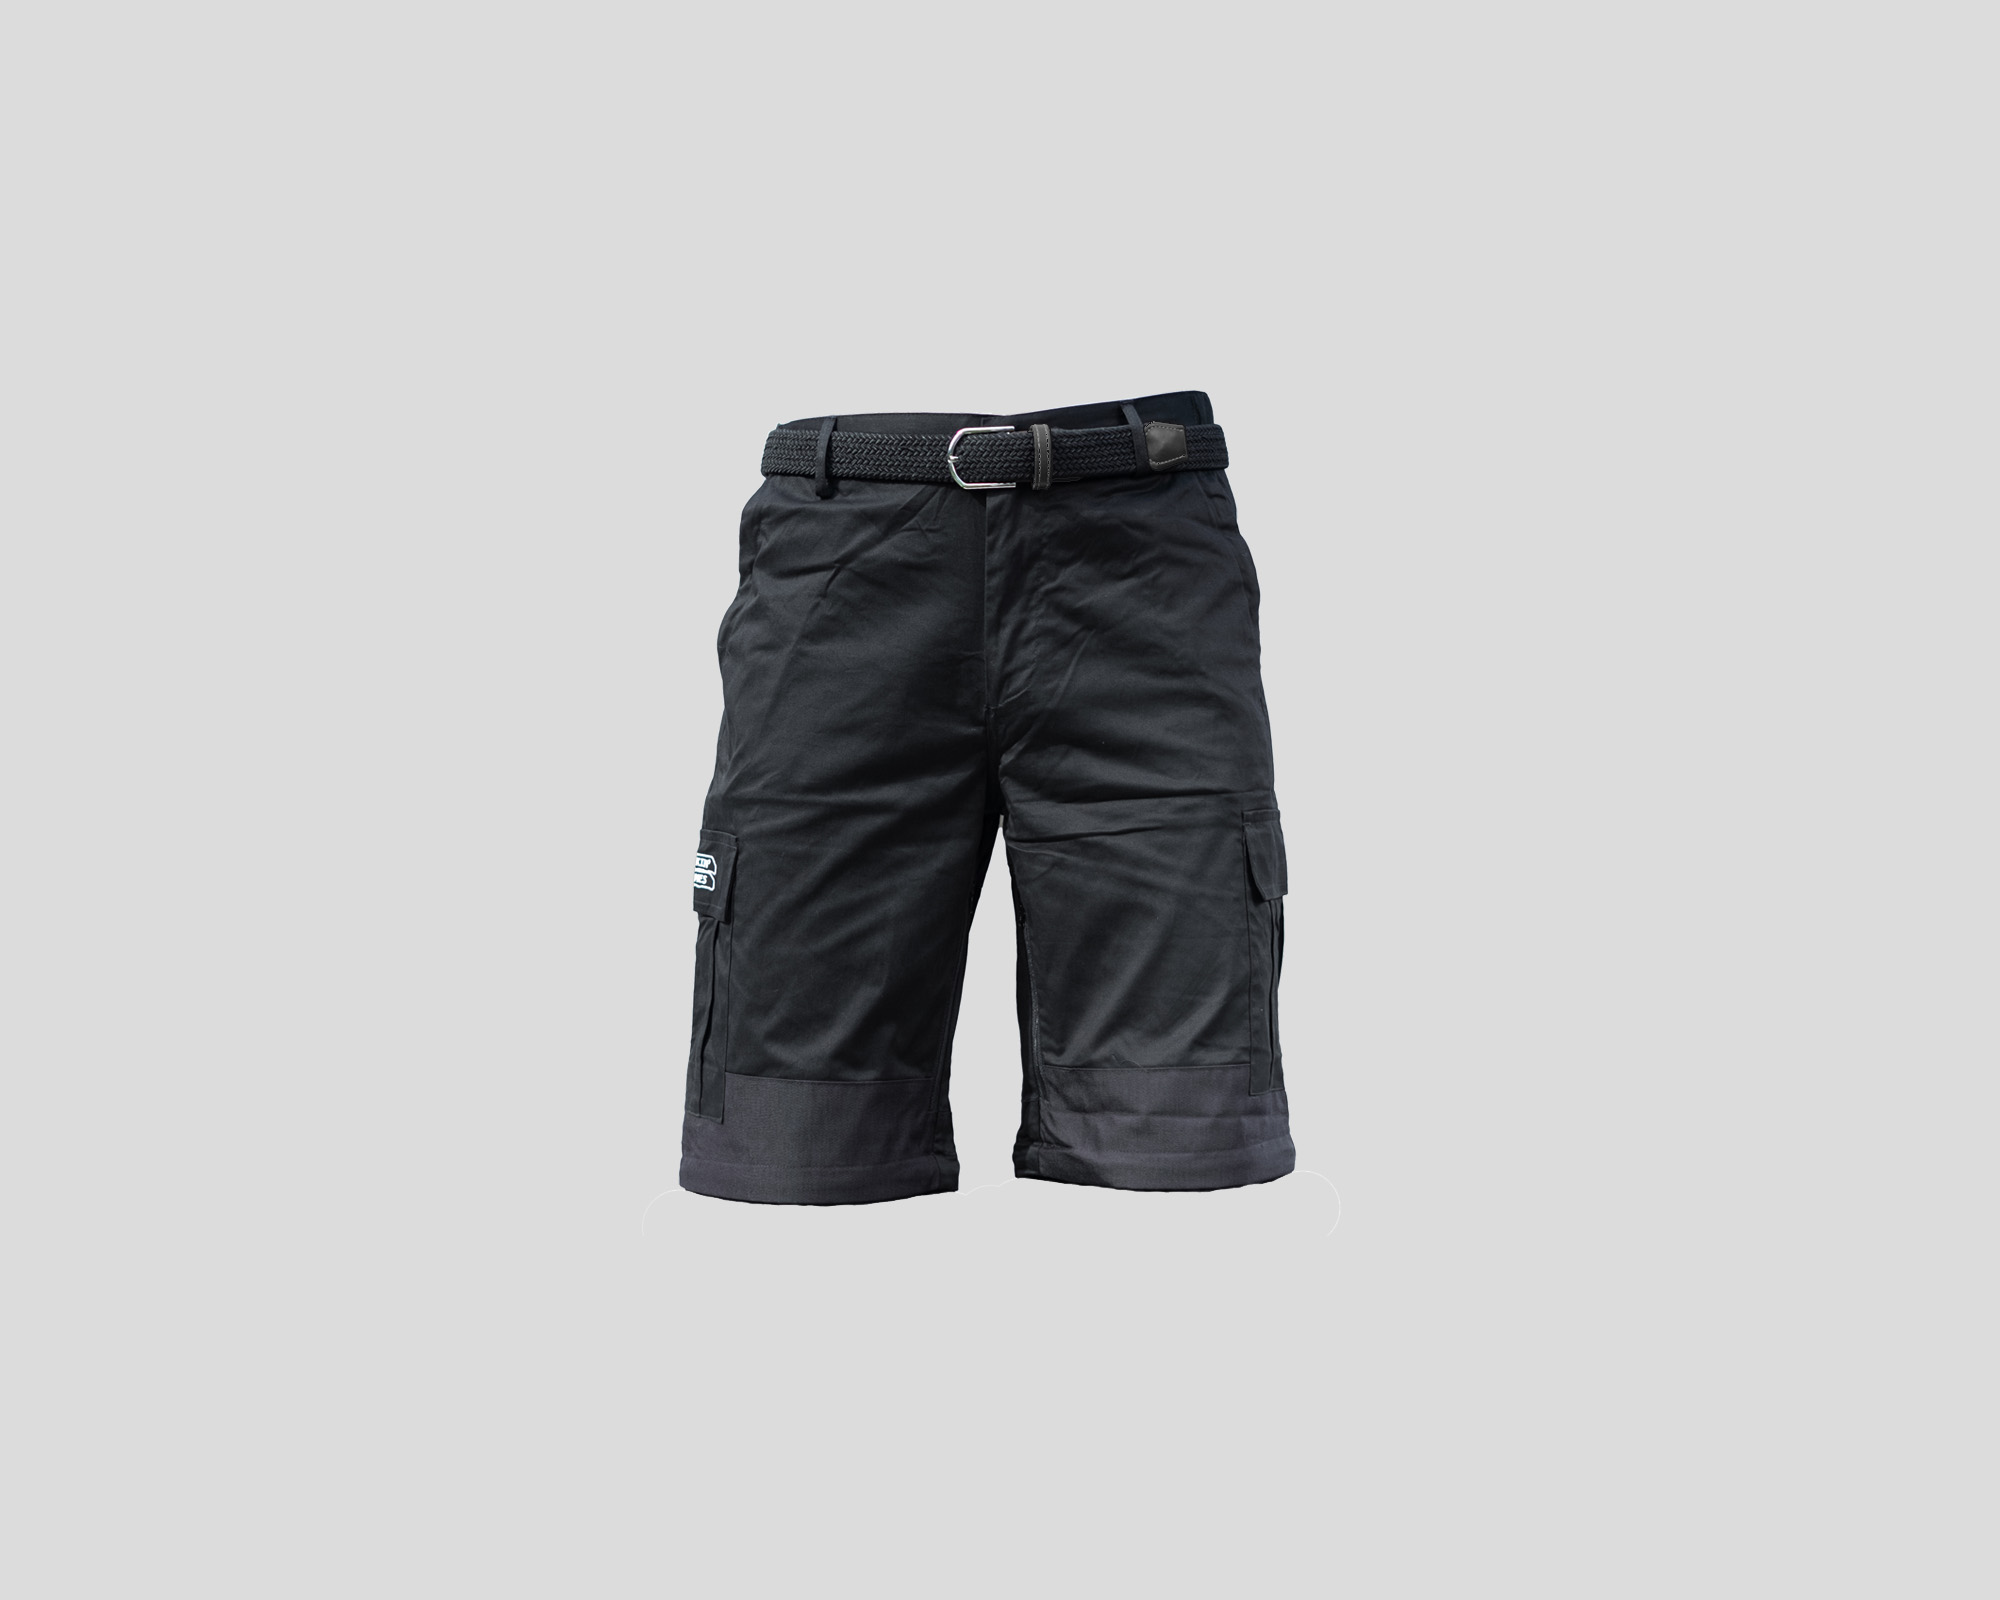 Buy Online Tan Brown Casual Twill Cargo Pants for Men Online at Zobello.